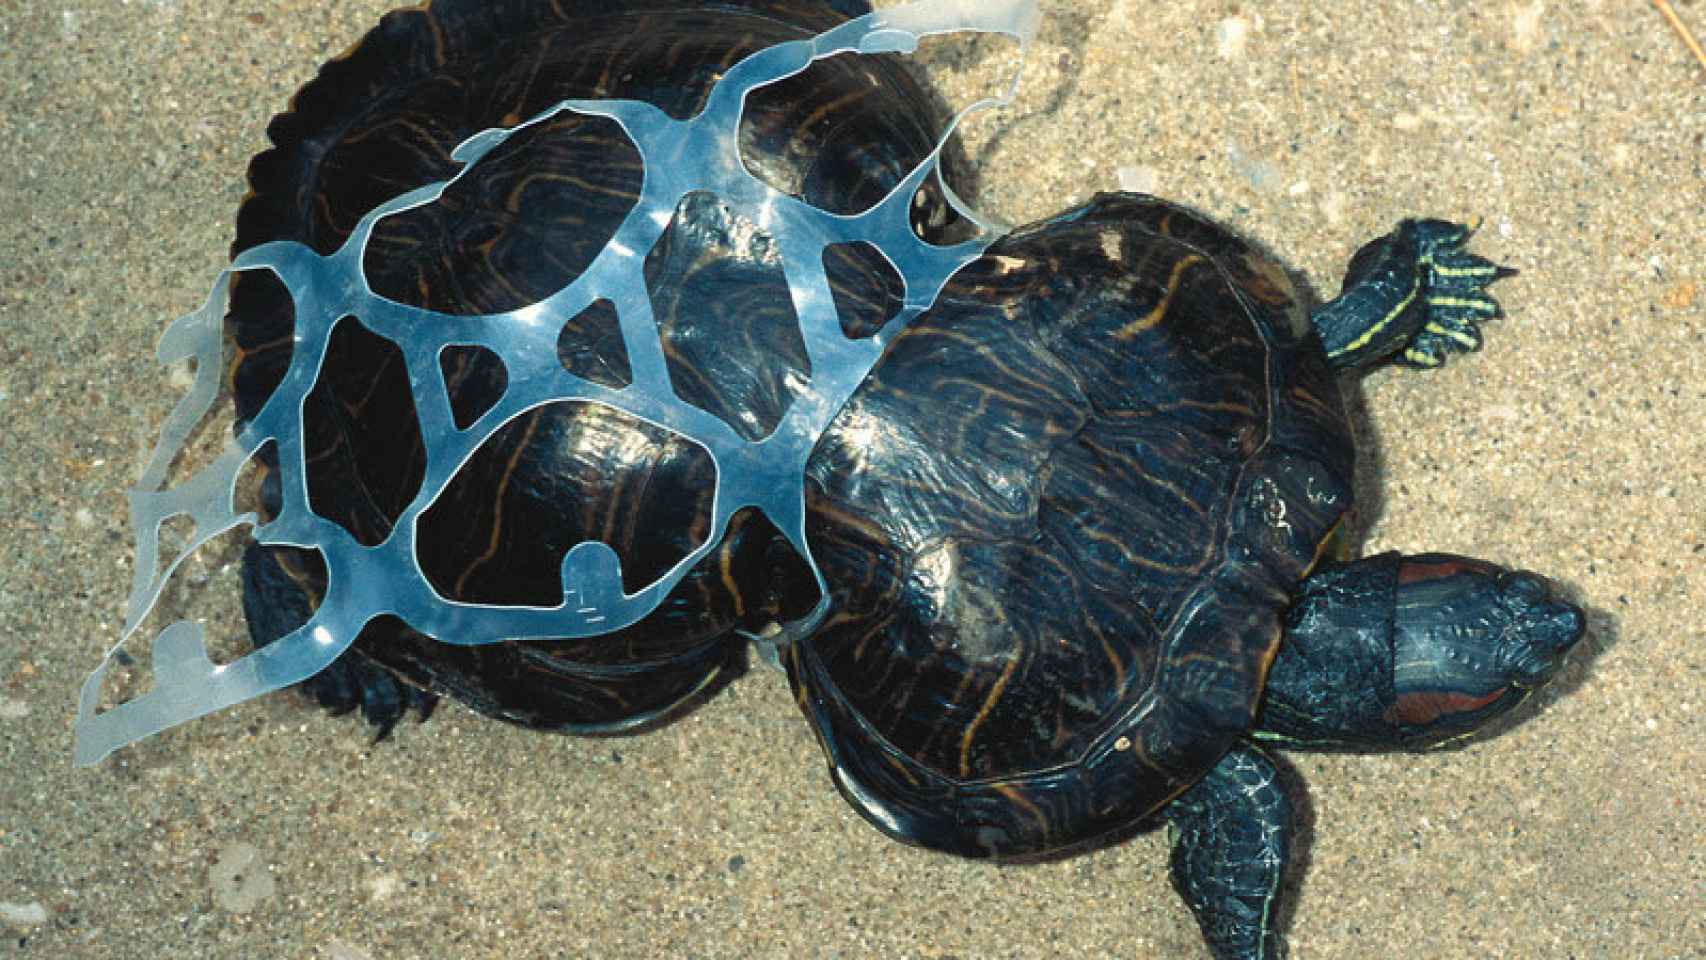 Plastic turtle.